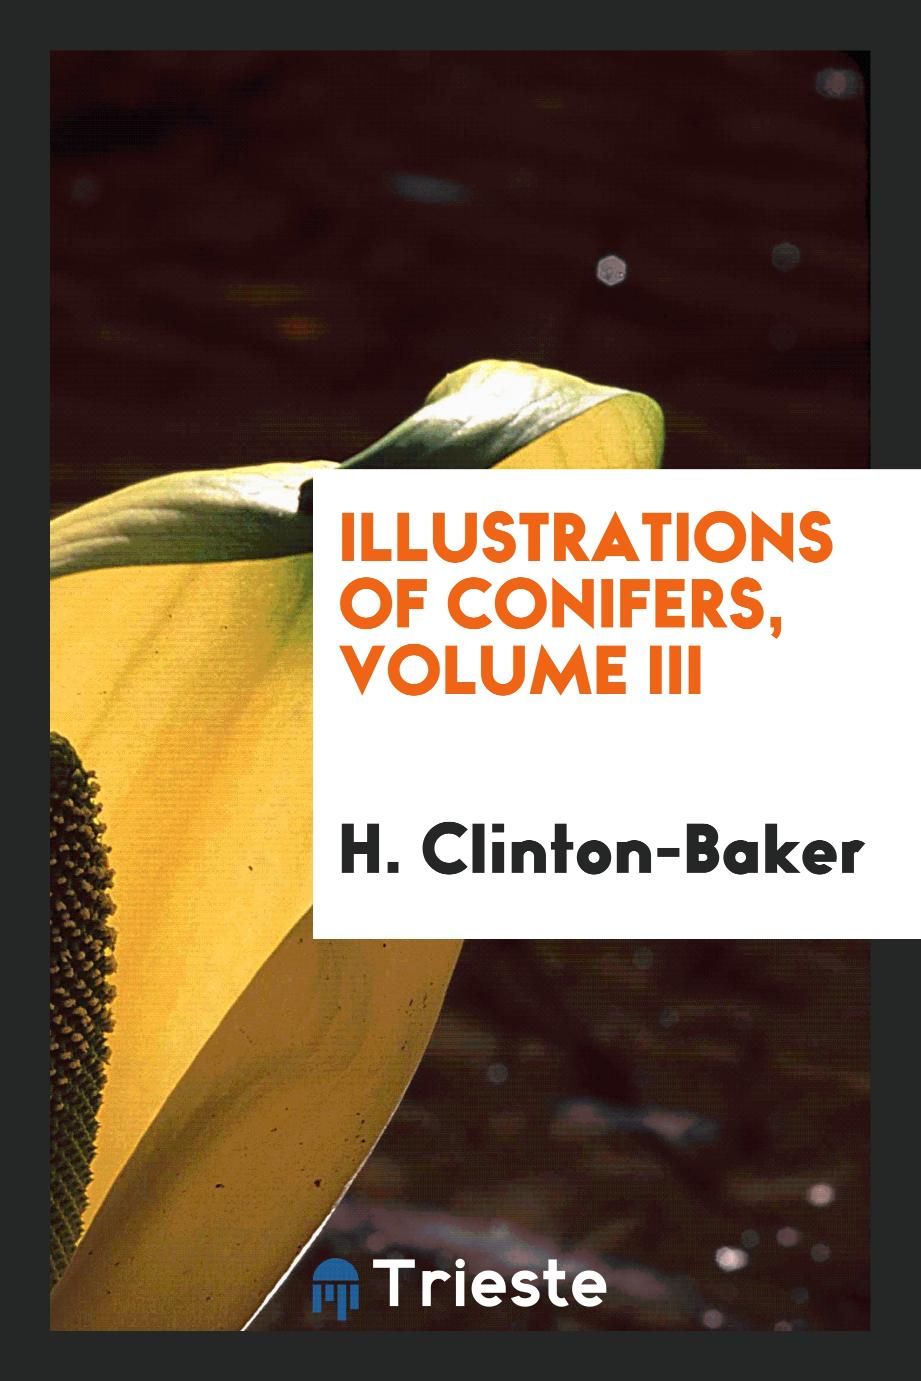 Illustrations of conifers, Volume III